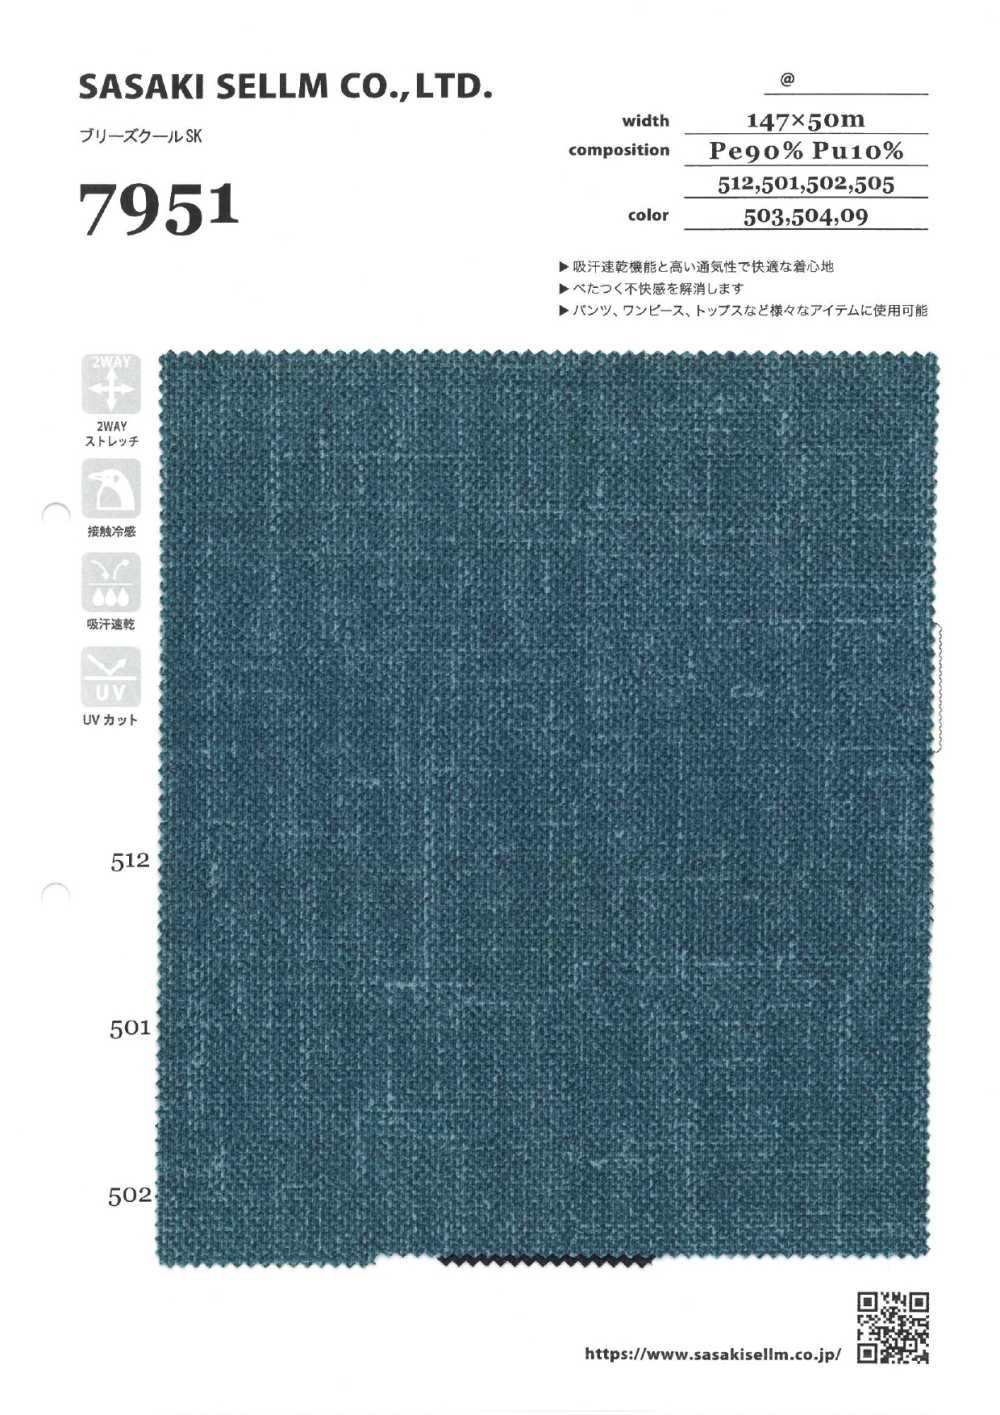 7951 Breeze Cool SK[Textile / Fabric] SASAKISELLM